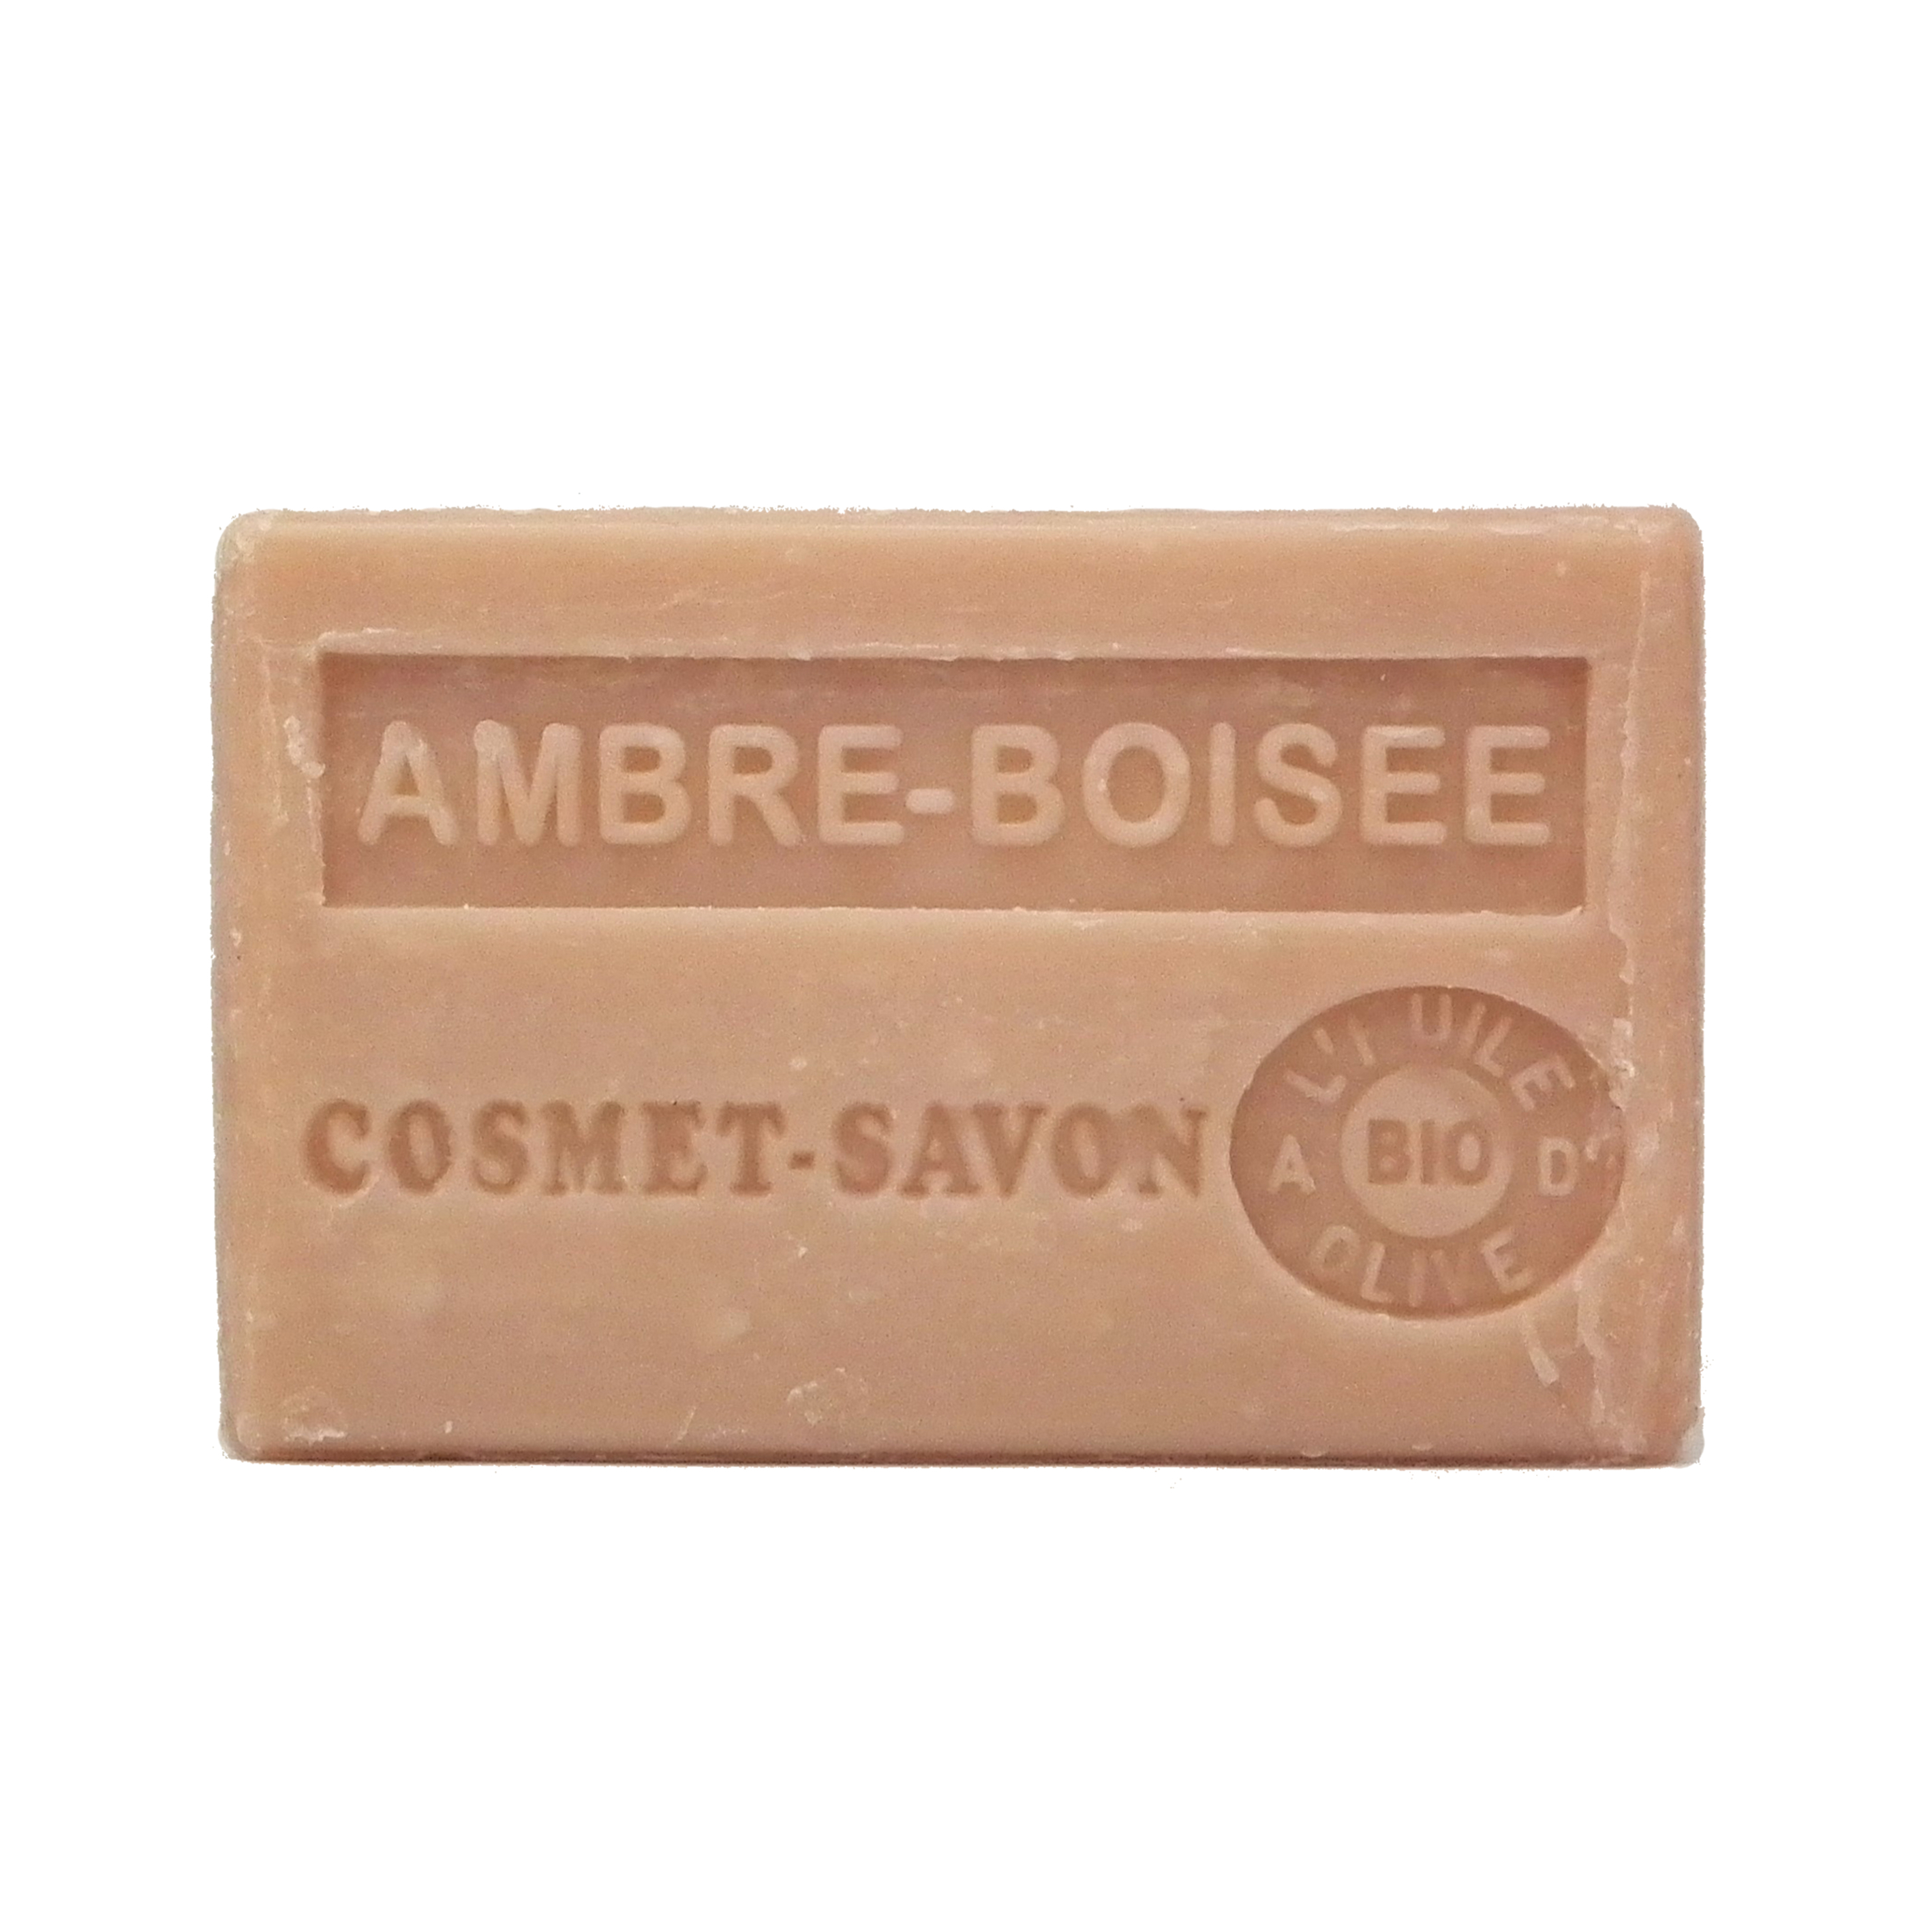 ambre-boisee-savon-125gr-au-beurre-de-karite-bio-cosmet-savon-3665205006041-face-JPEG